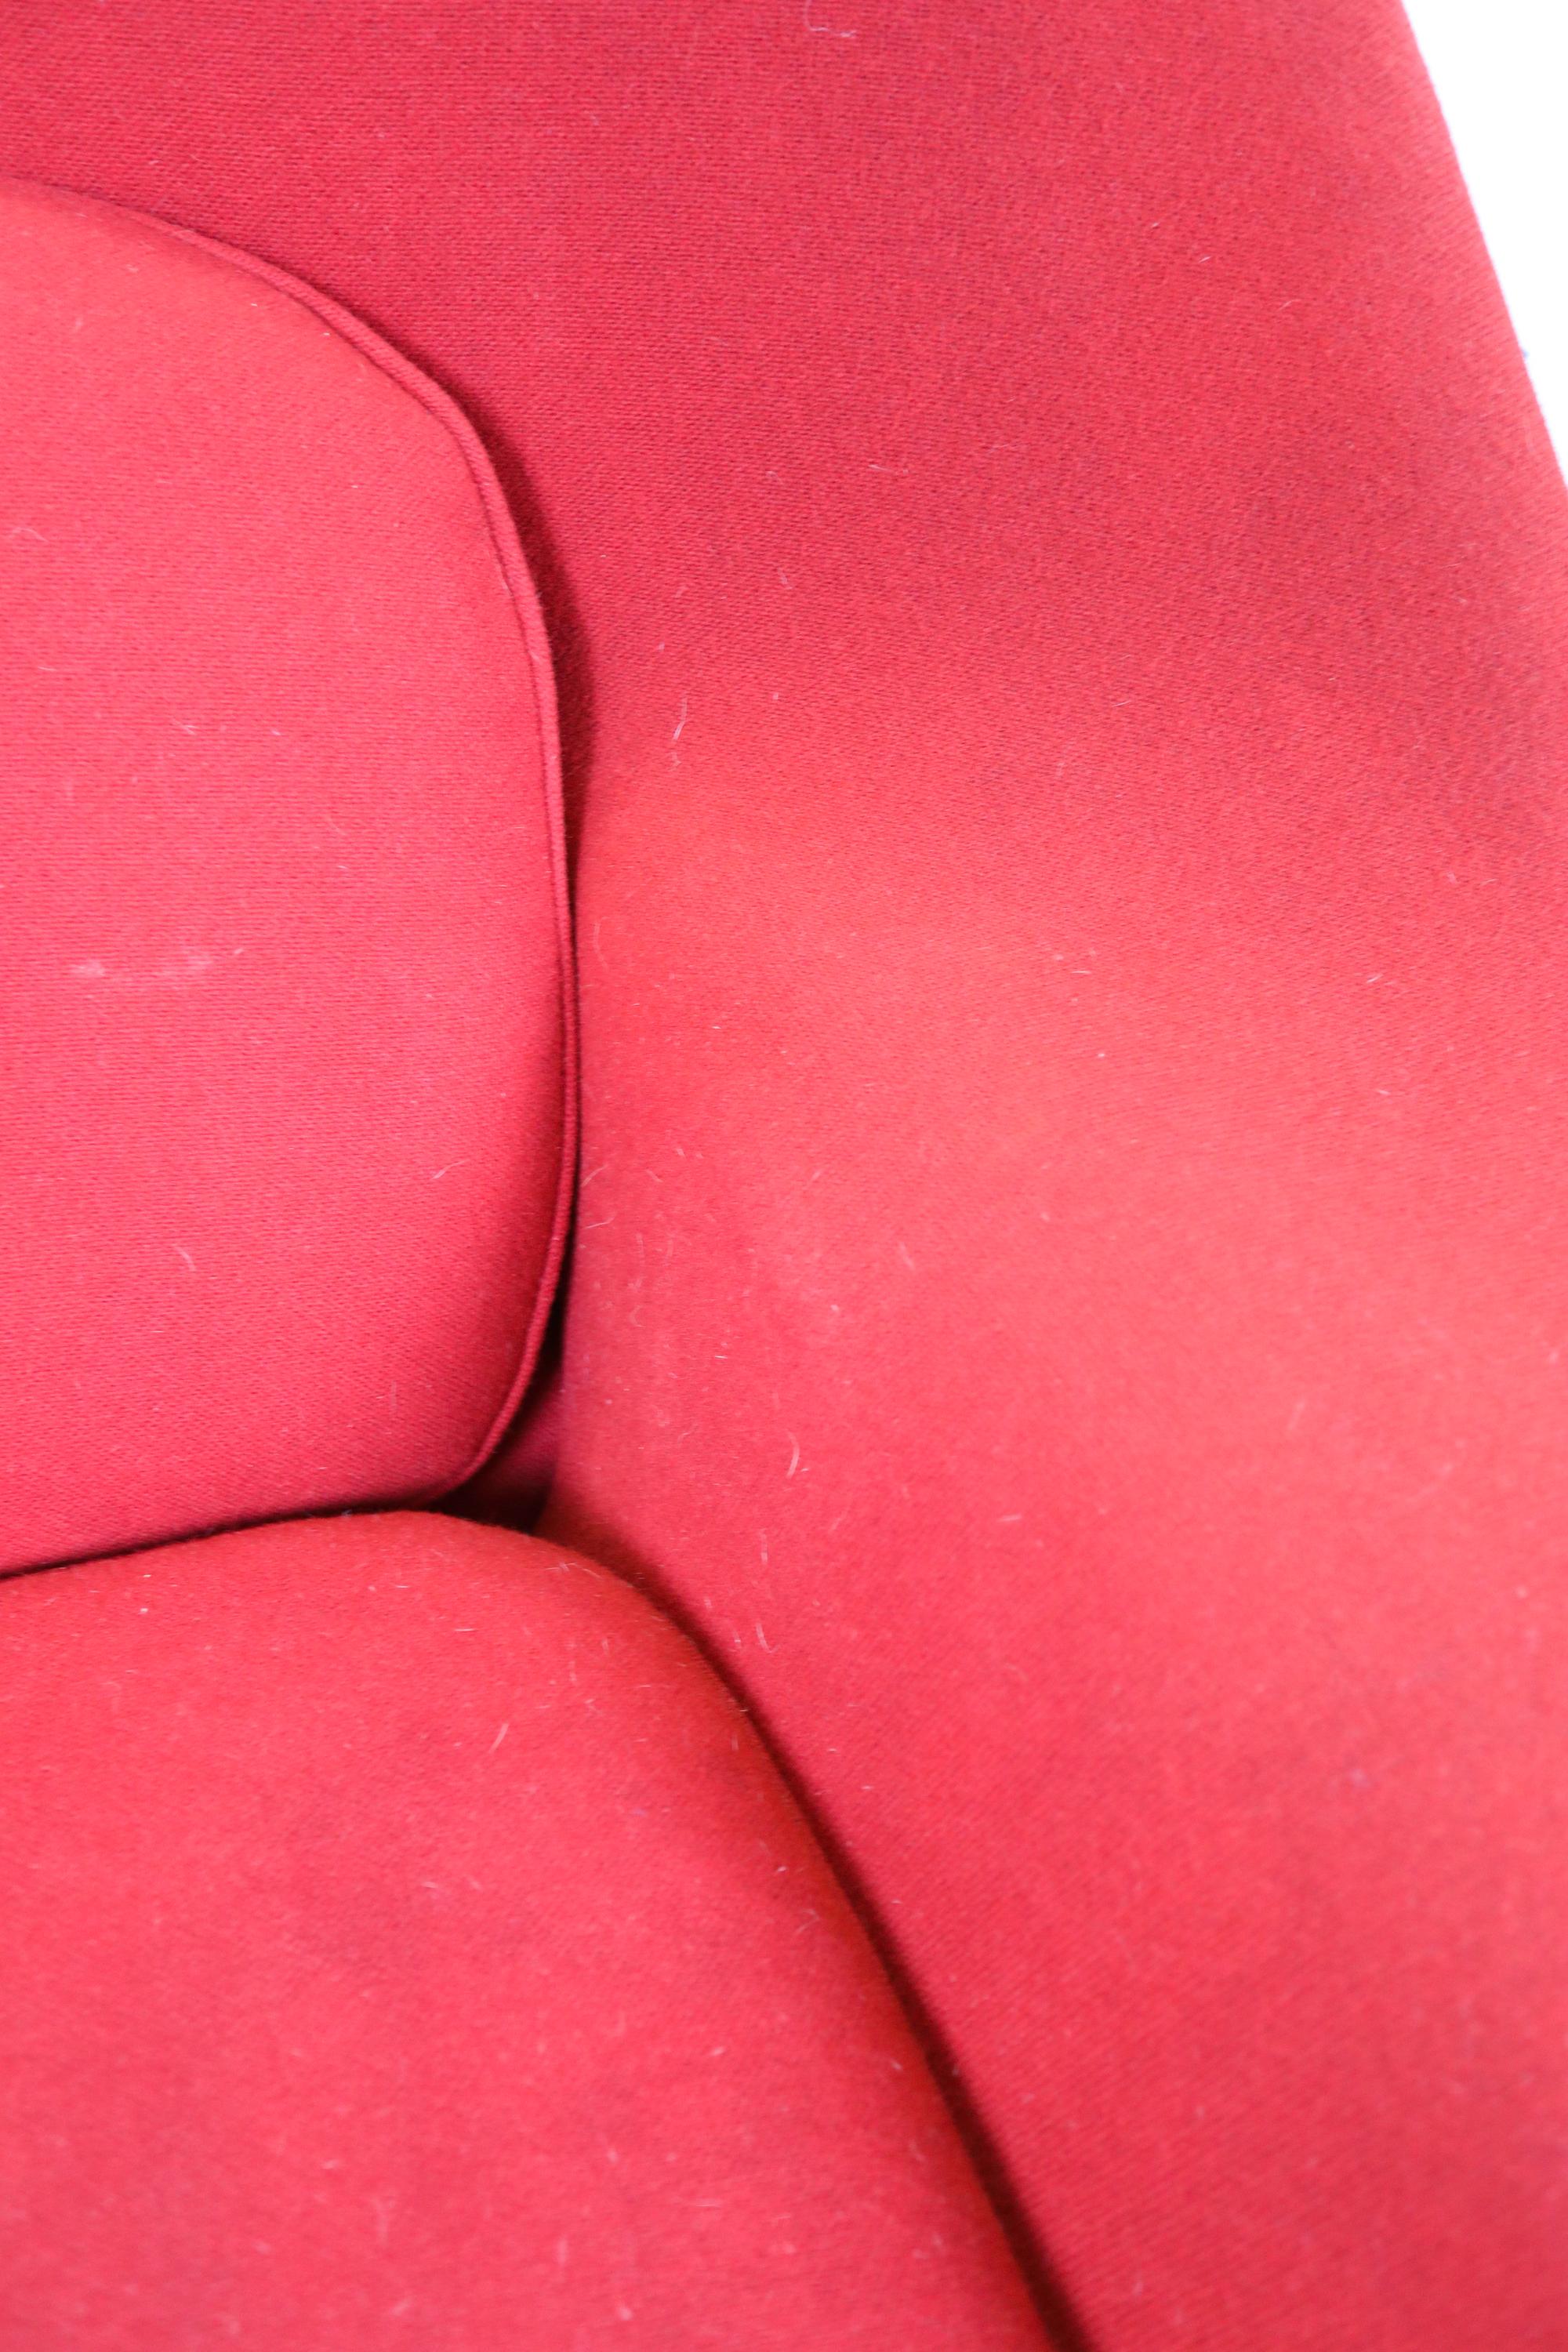 Eero Saarinen Womb Chair And Ottoman For Sale 2